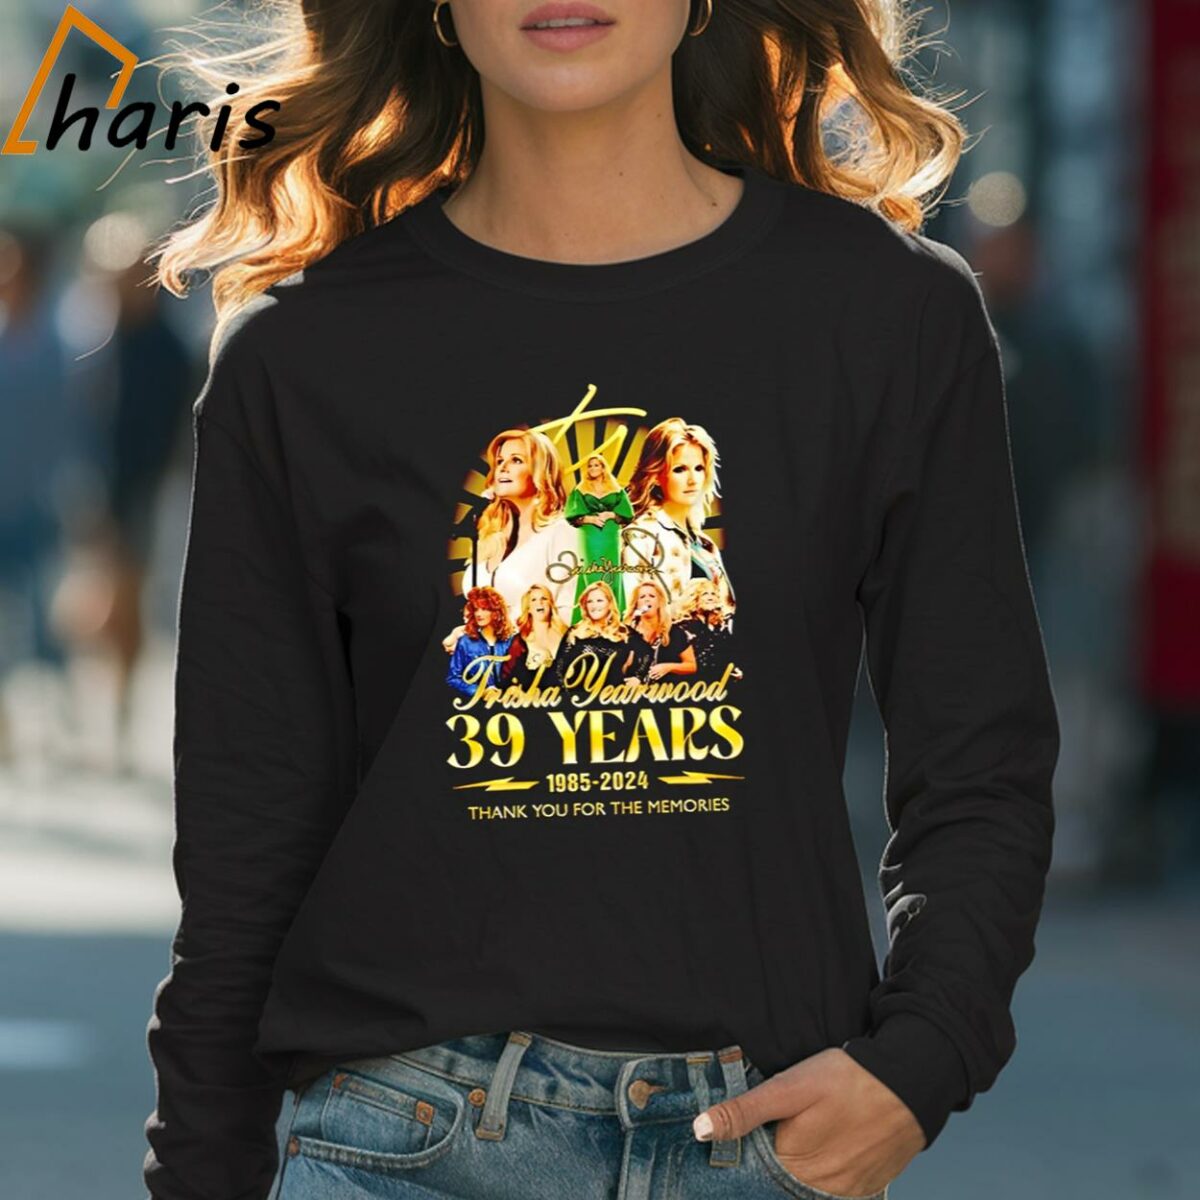 Trisha Yearwood 39 Years 1985 2024 Thank You For The Memories Shirt 4 Long sleeve shirt